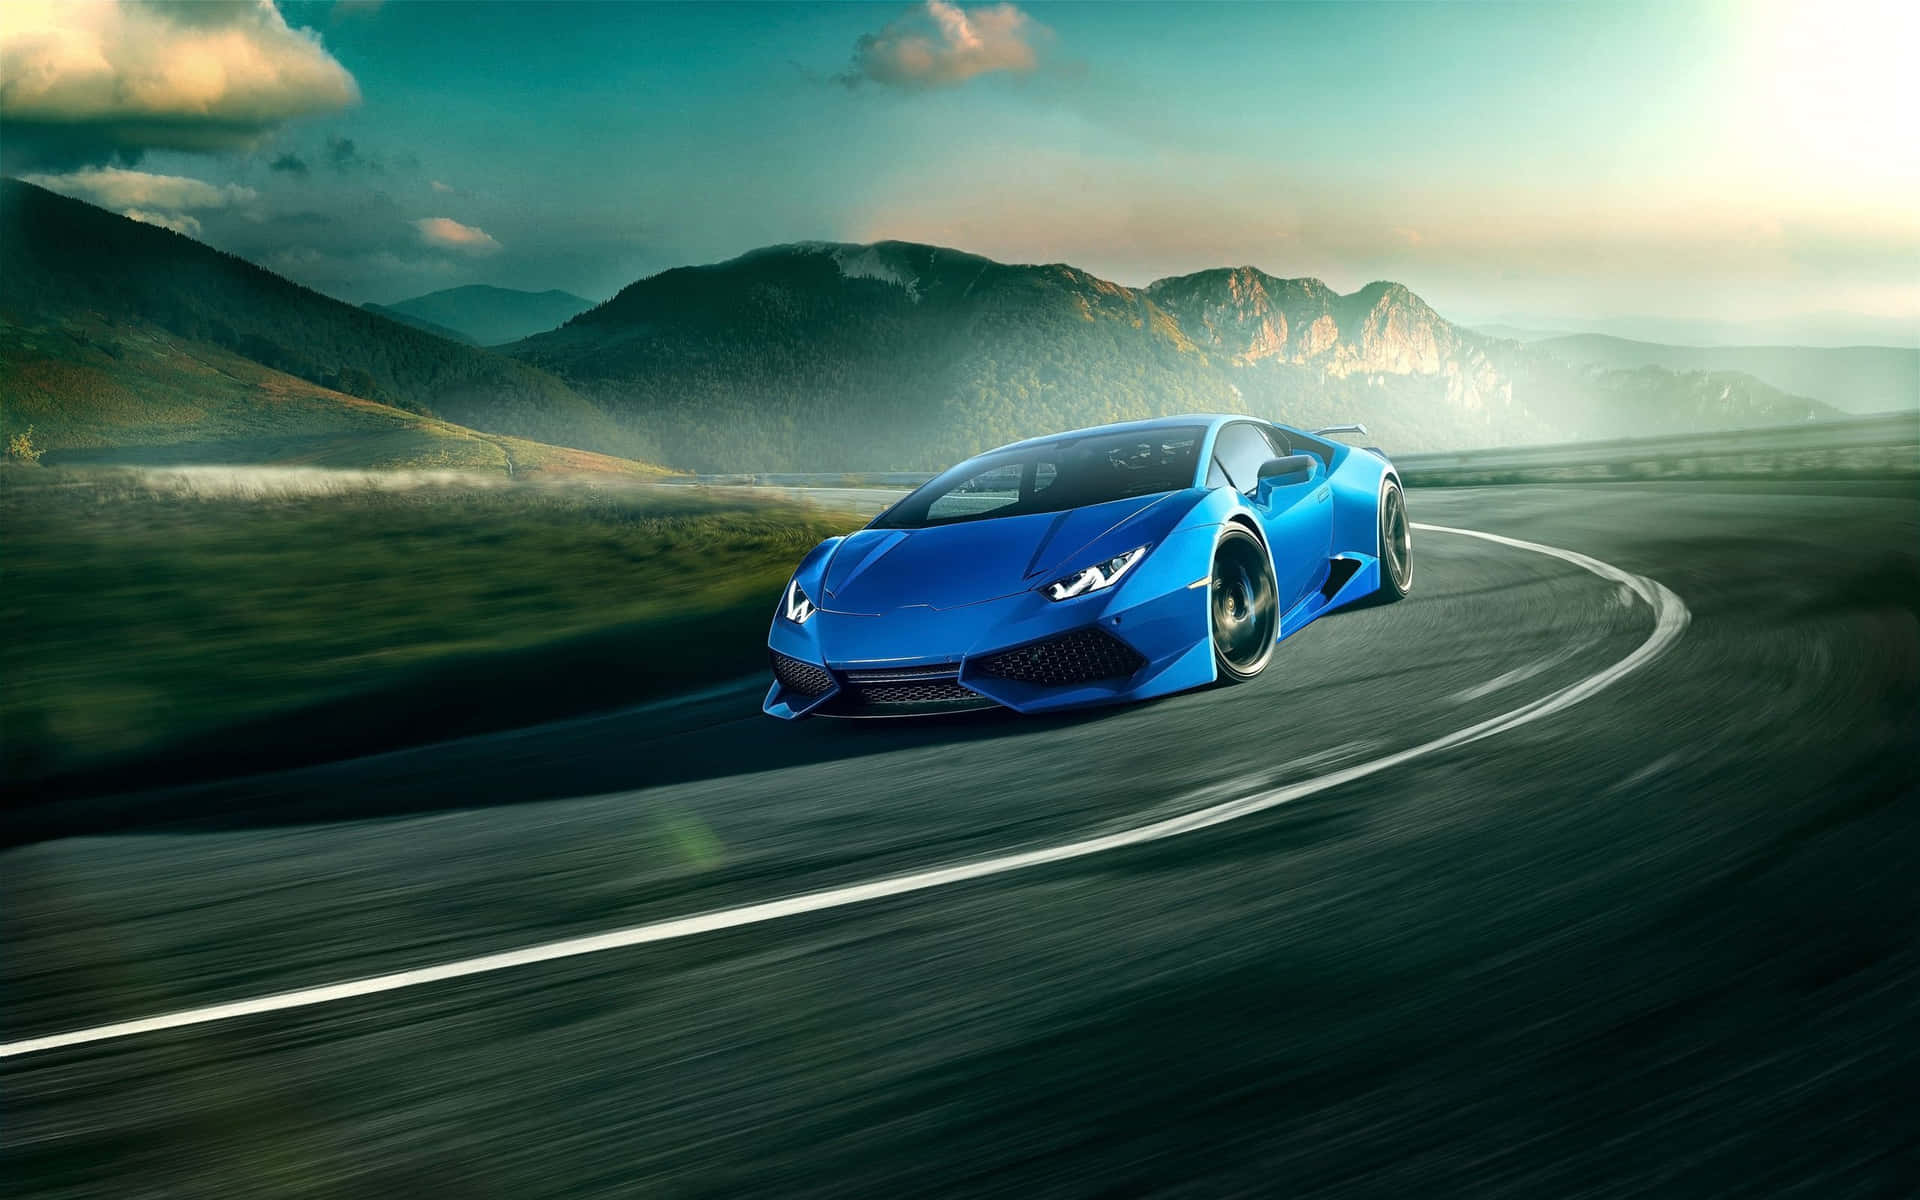 Cool Blue Lamborghini Huracan On The Road Wallpaper